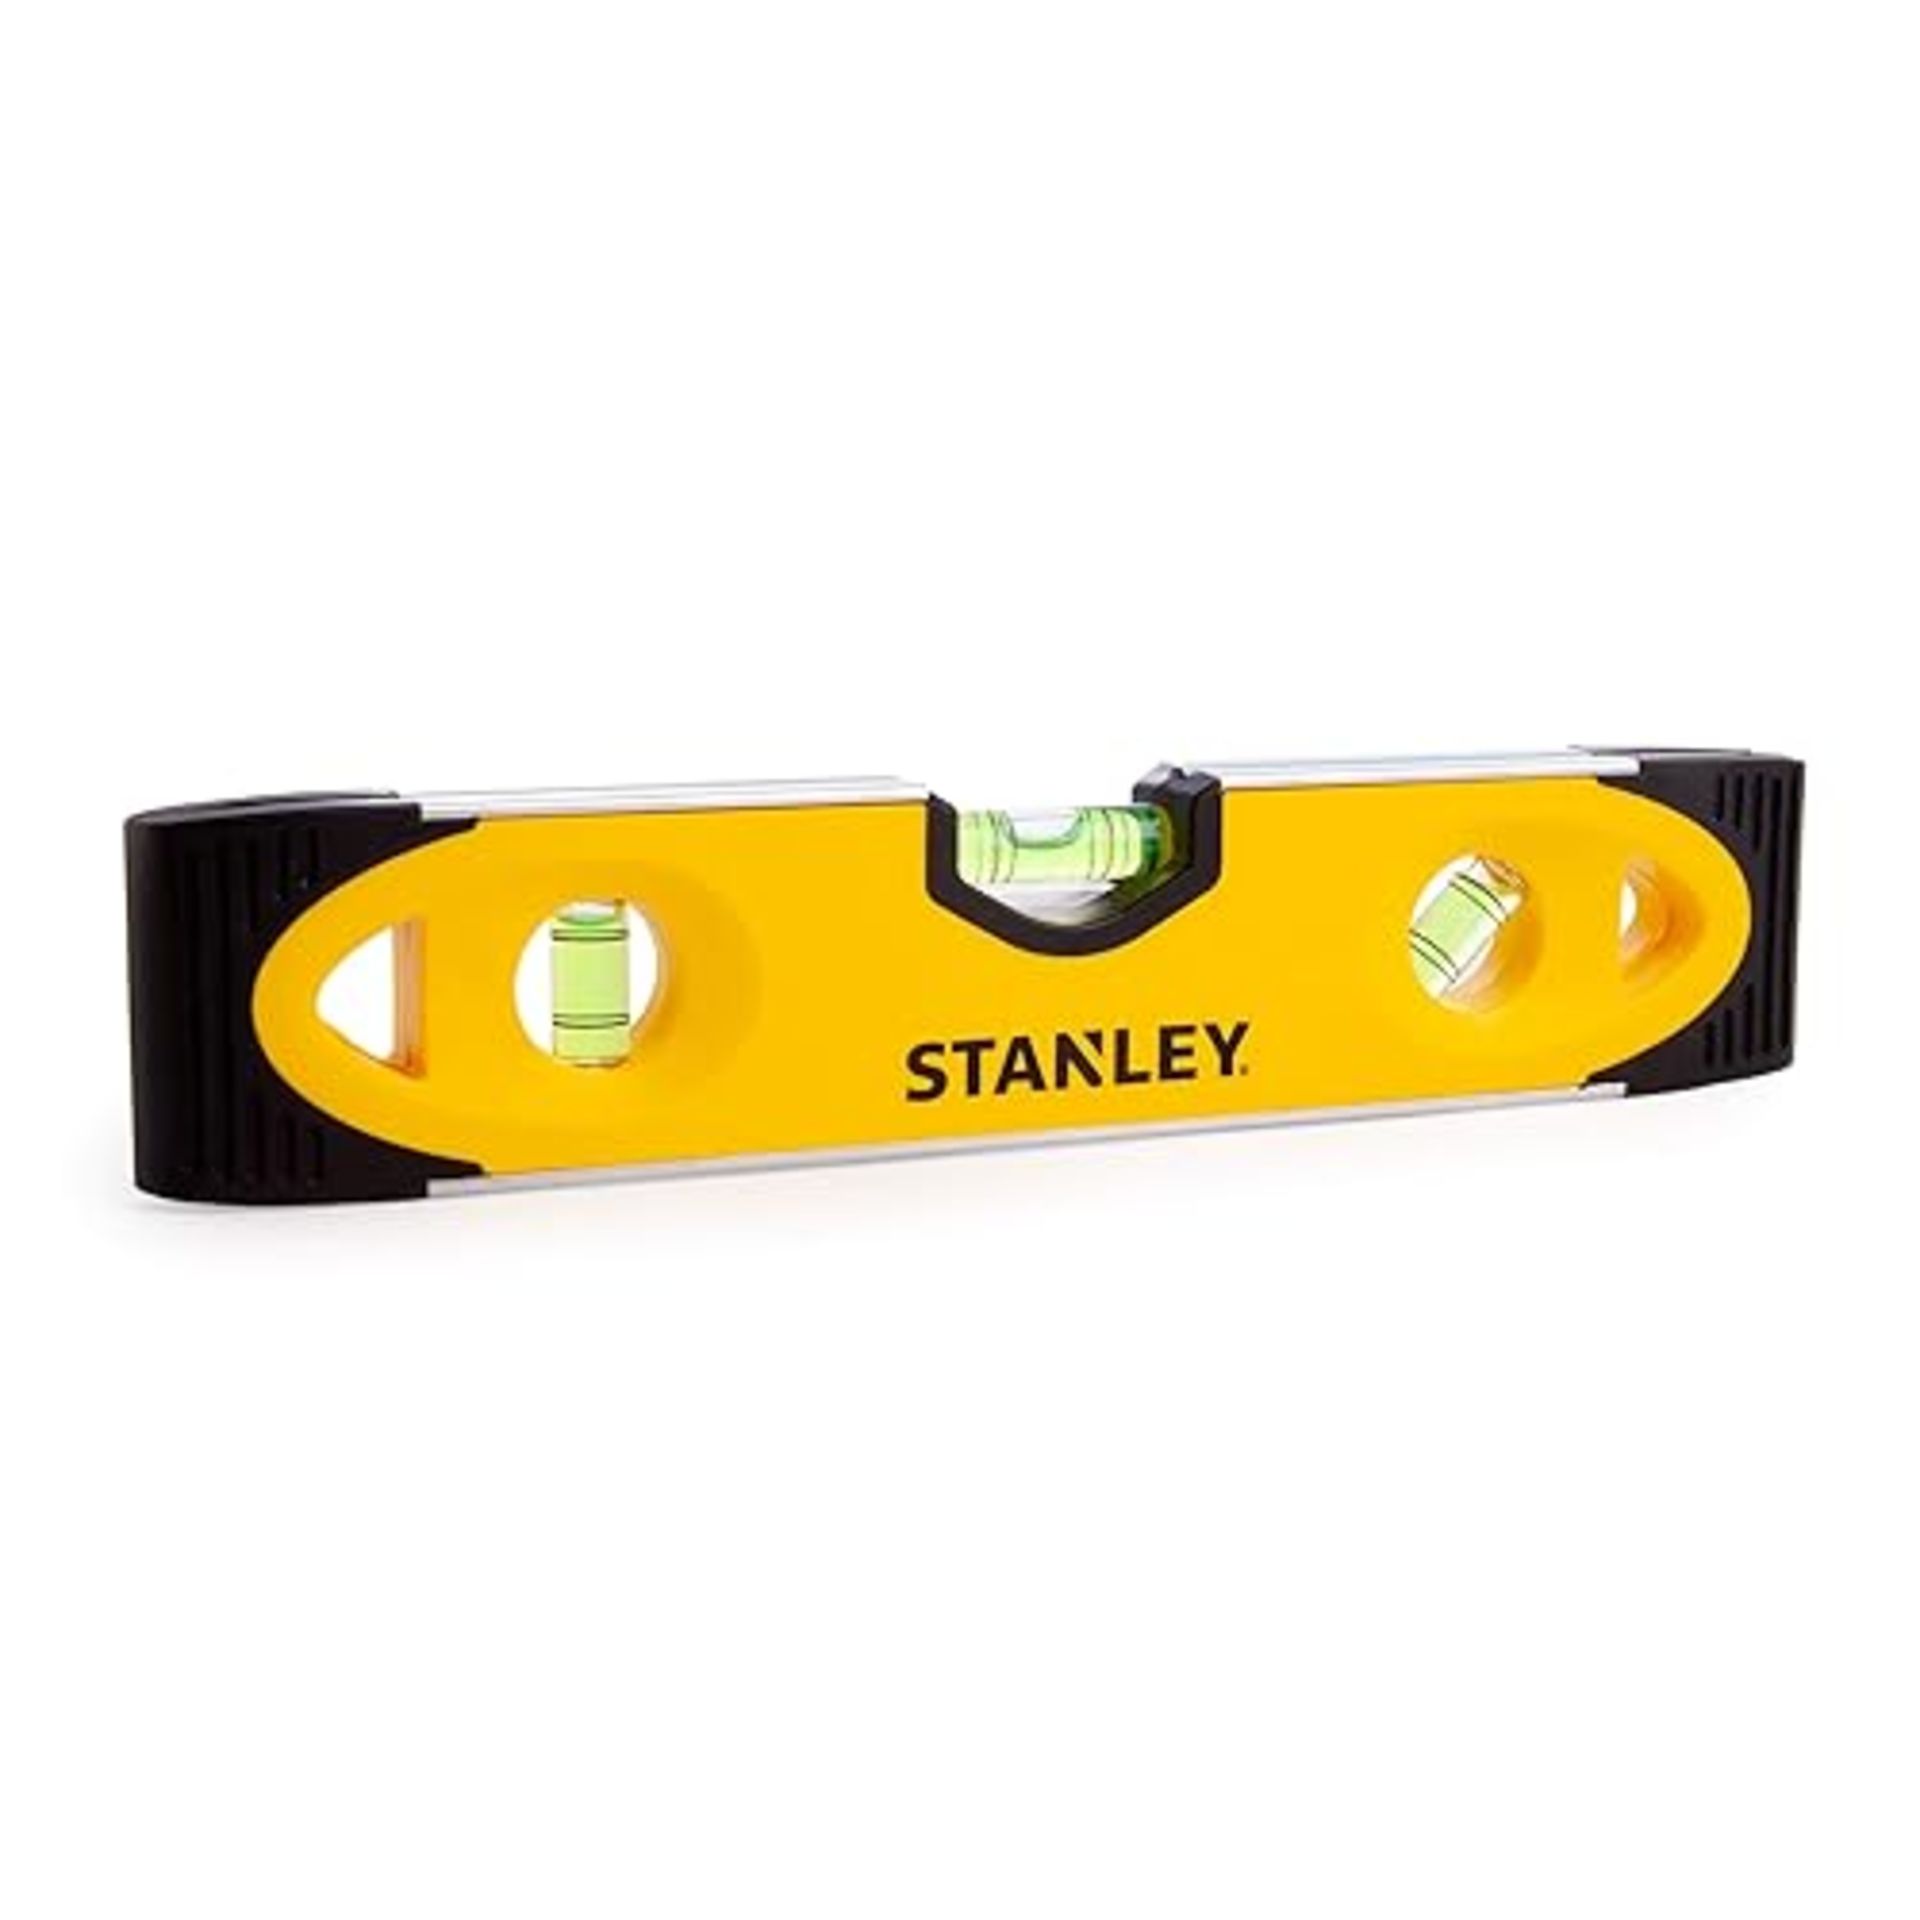 Stanley Shock Proof Torpedo Level 230 mm/9 Inch 0-43-511